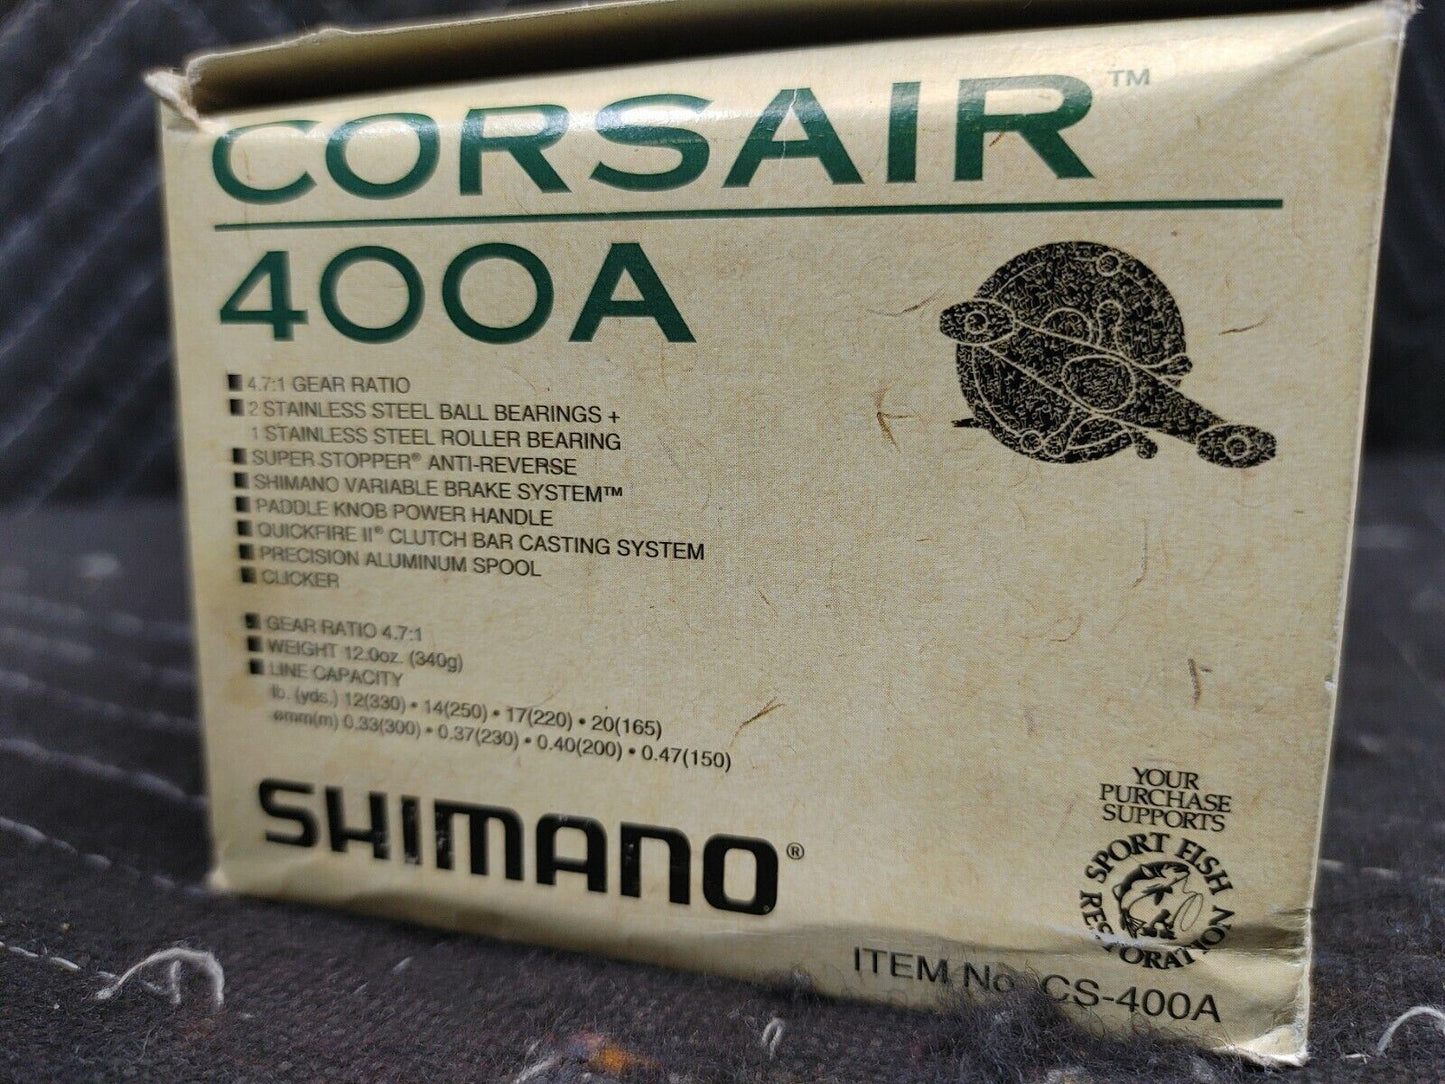 NOS - Shimano Corsair CS 400A Level wind Baitcasting Reel - New & Unused